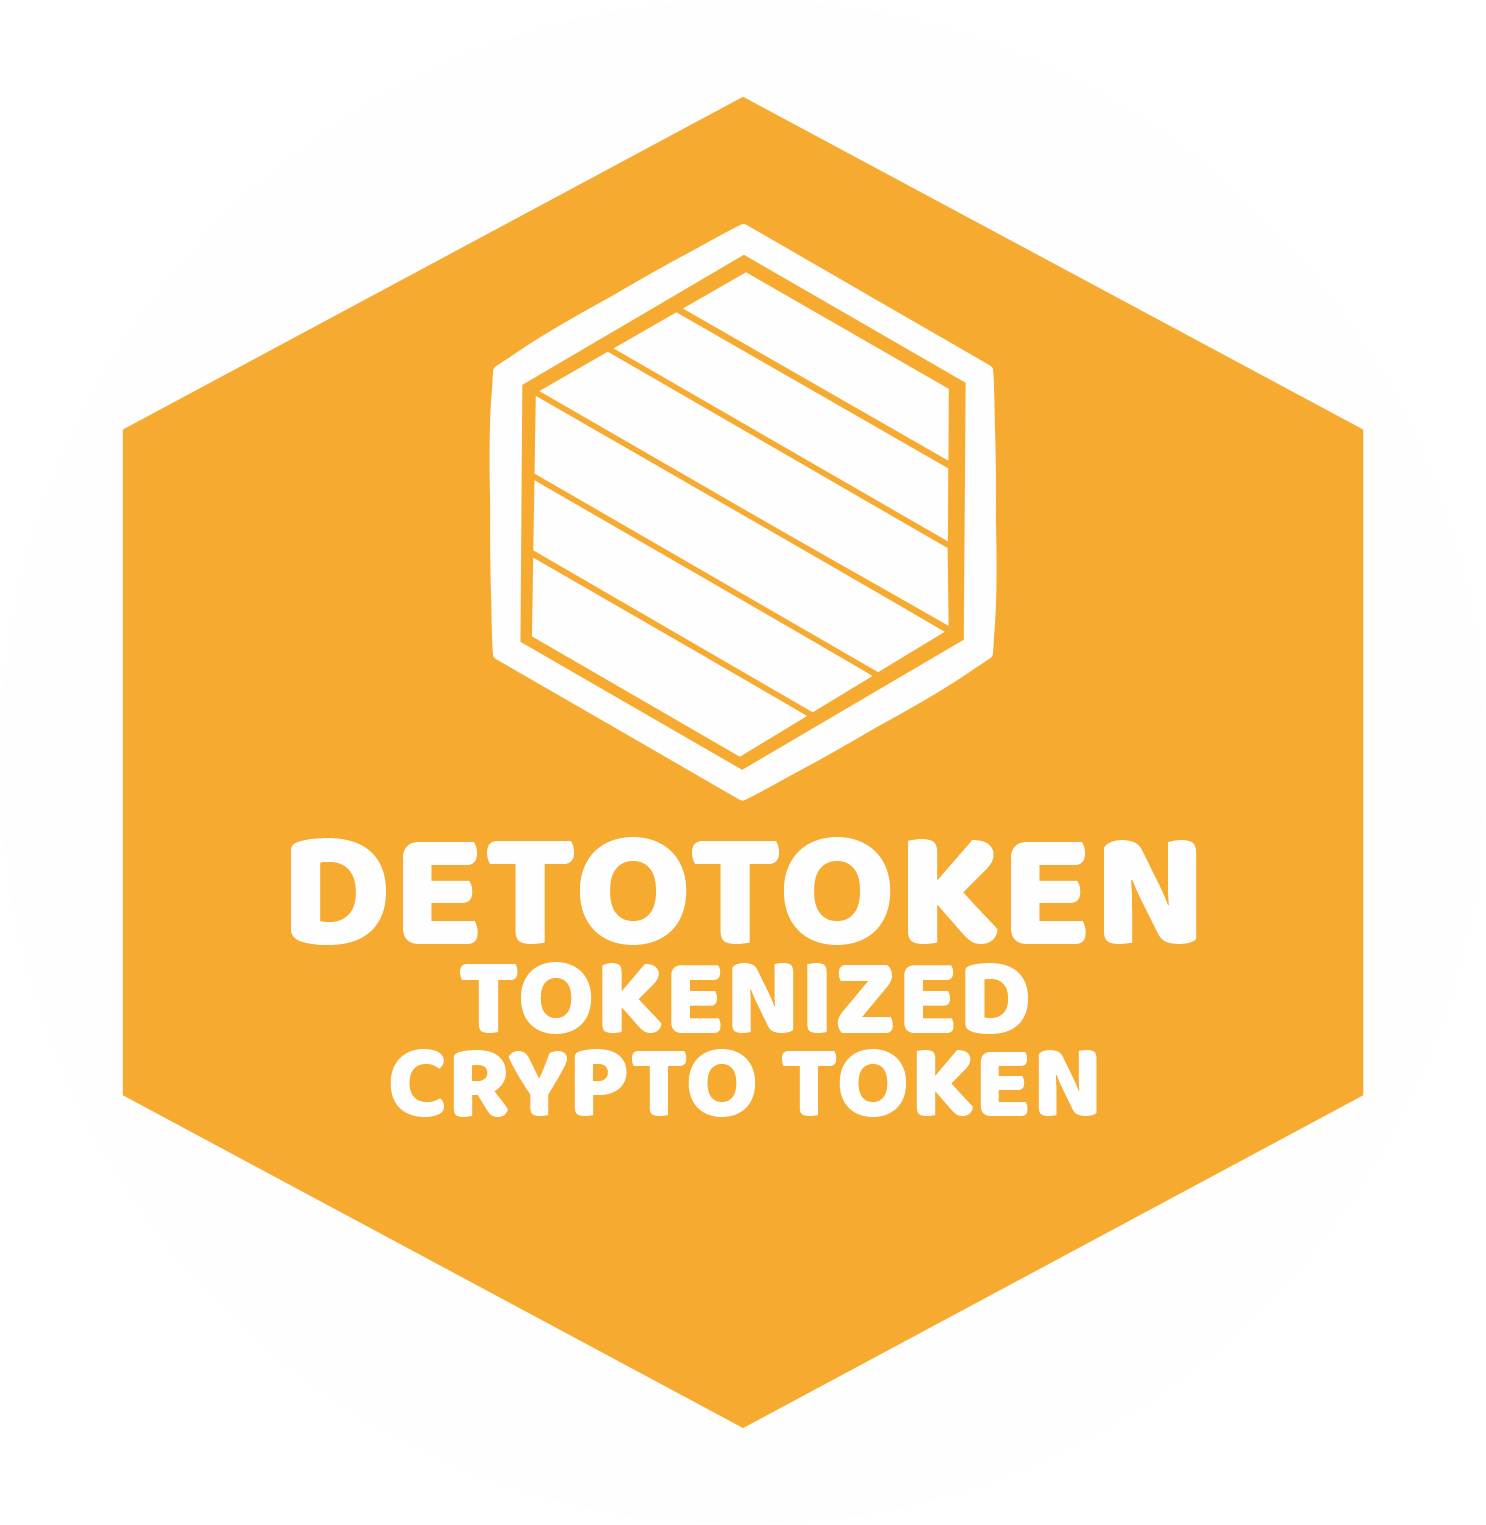 DETOTOKEN 🔴 Tokenized Crypto Token